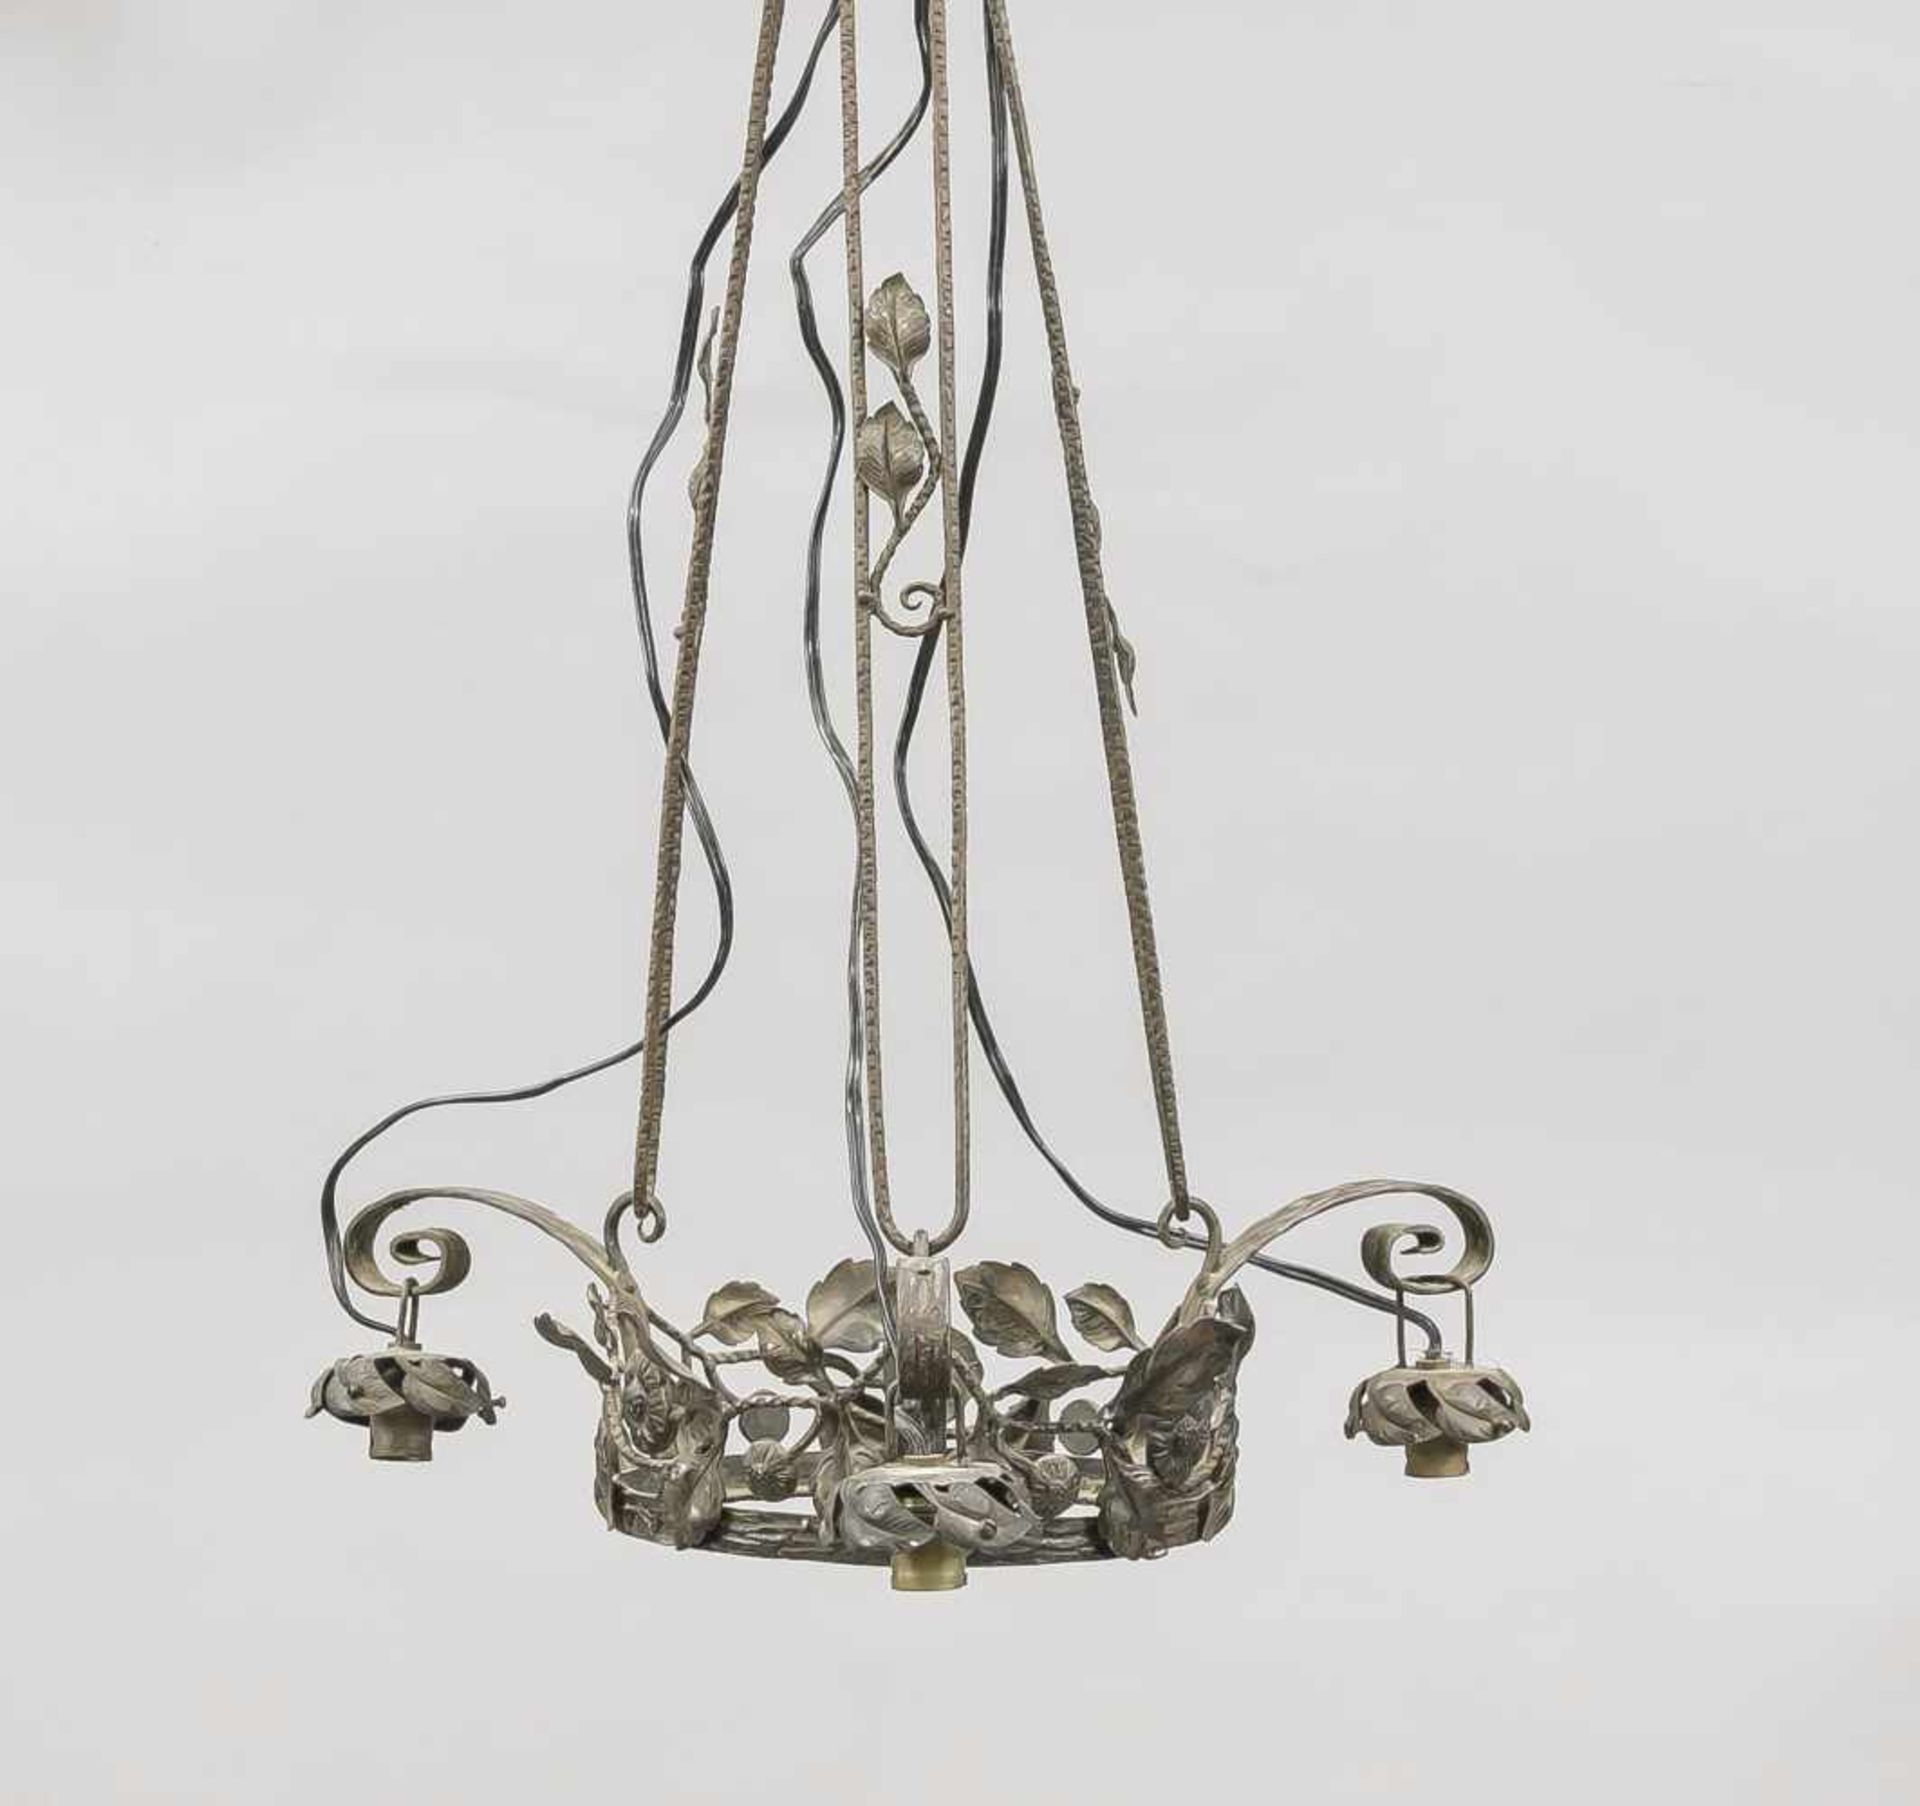 Jugendstil Deckenlampe, Frankreich, um 1900, 3-flg., in der Art von Muller Frères,Luneville.